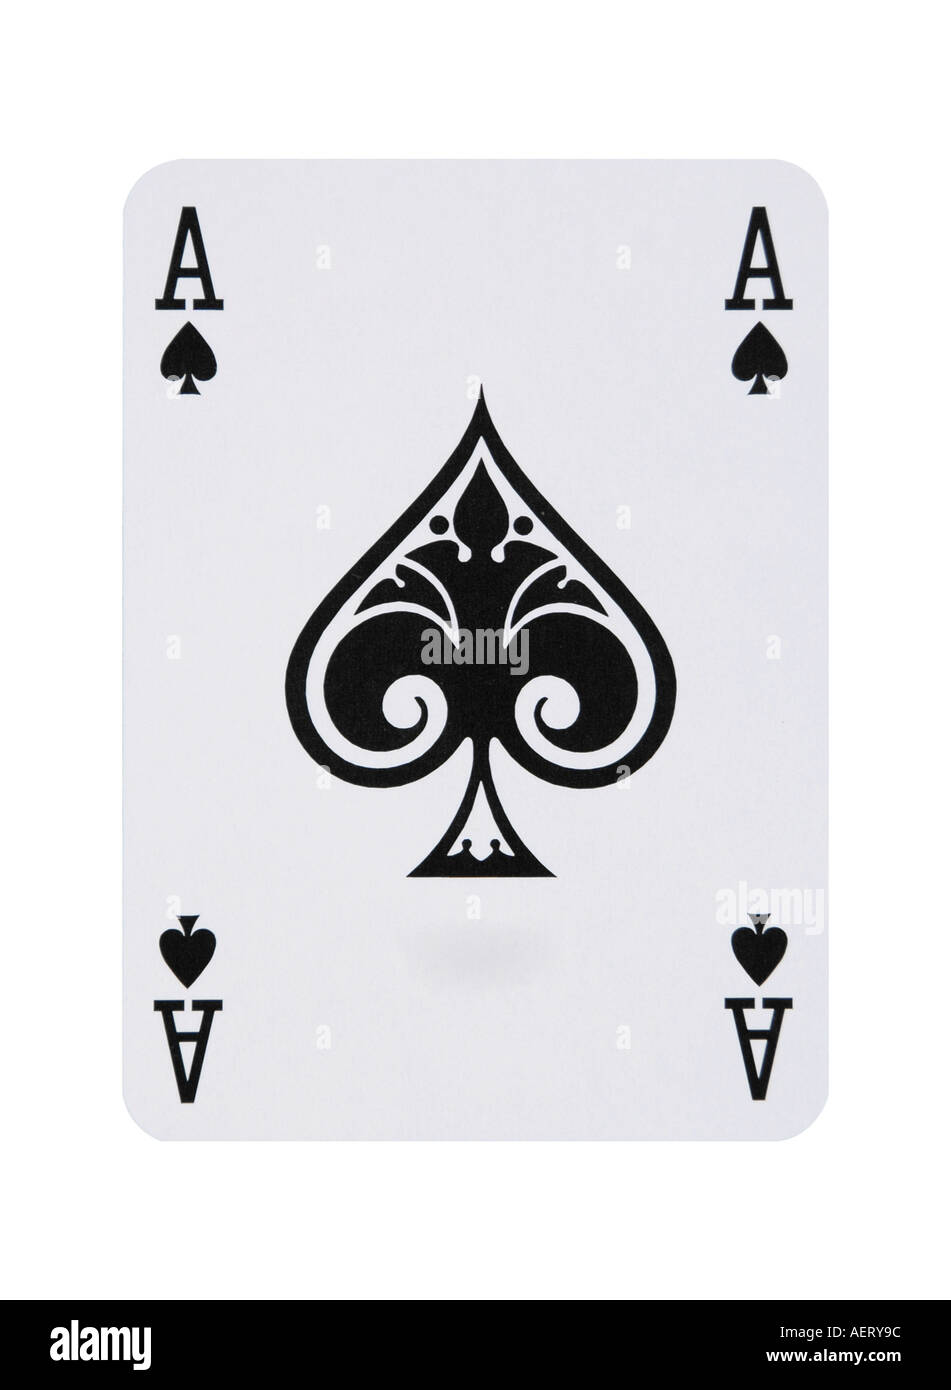 Ace of spades card Stock Photo - Alamy